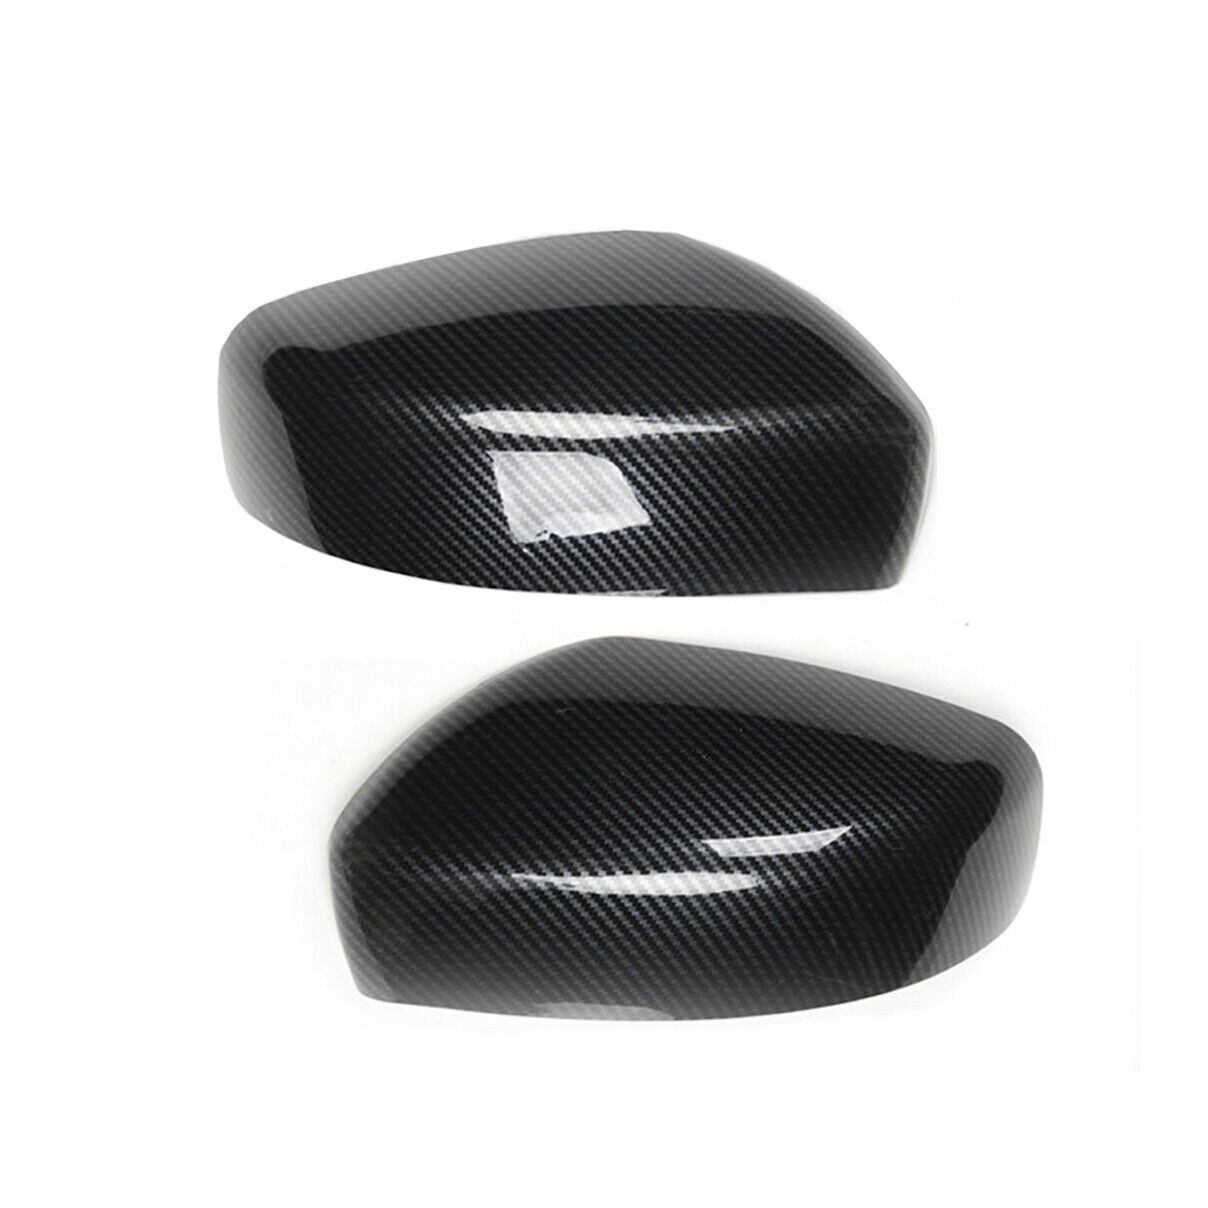 For Infiniti G25 G37 2010 -2013 Carbon Fiber Rearview Side Mirror Cap Cover Trim